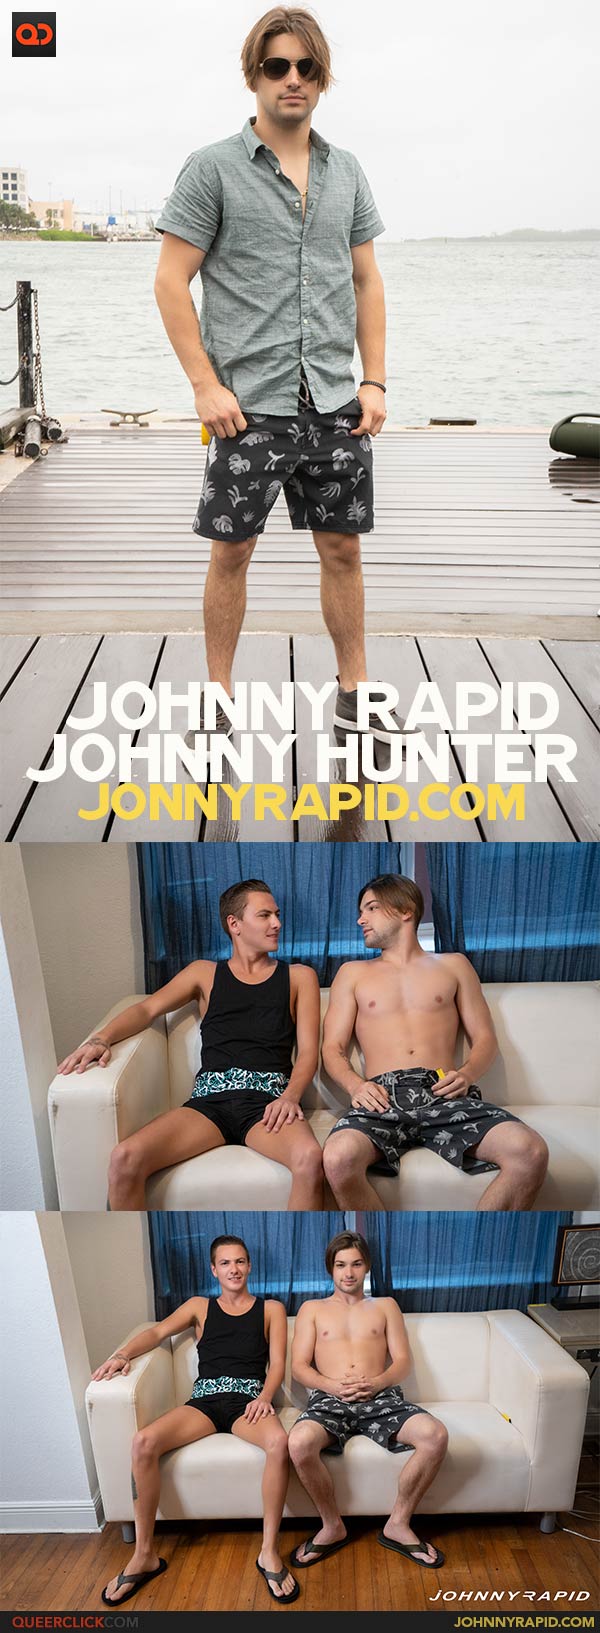 Johnny Rapid: Johnny Rapid and Johnny Hunter